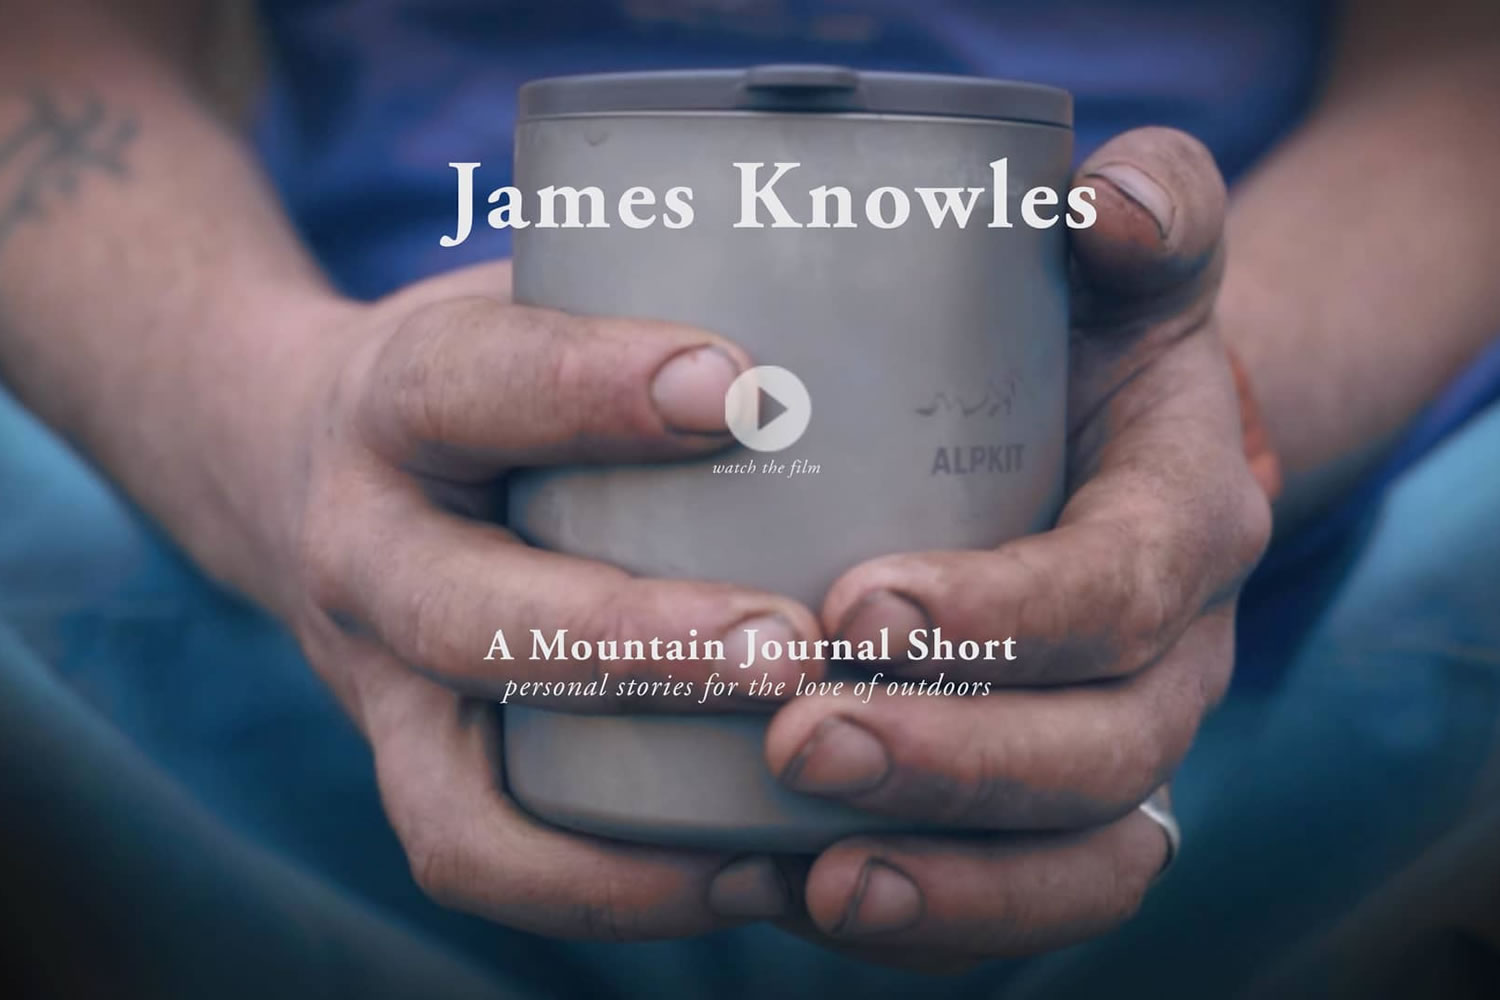 James Knowles - A Mountain Journal Short, AlpKit Bikepacking Video